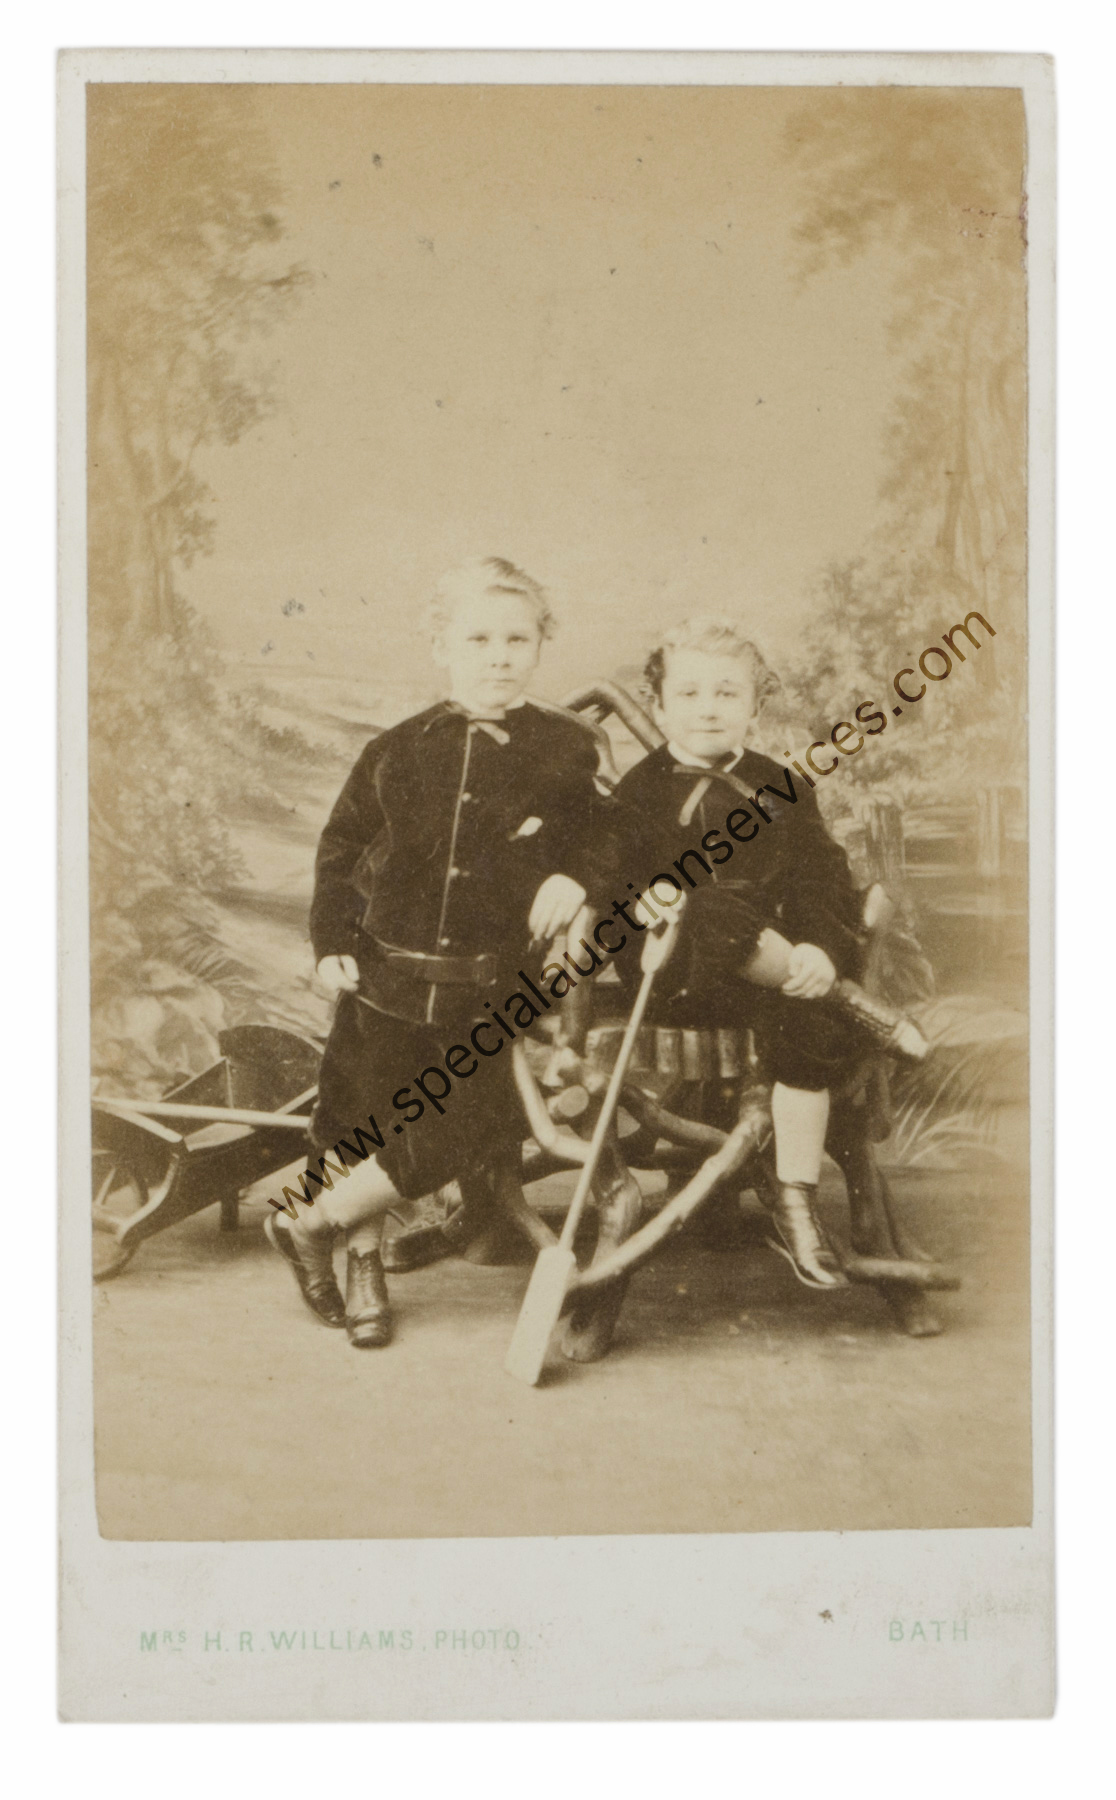 Cartes de Visite Portraits - Mrs H R Williams 35 Milsom Street Bath, sitters including little boys - Image 3 of 3